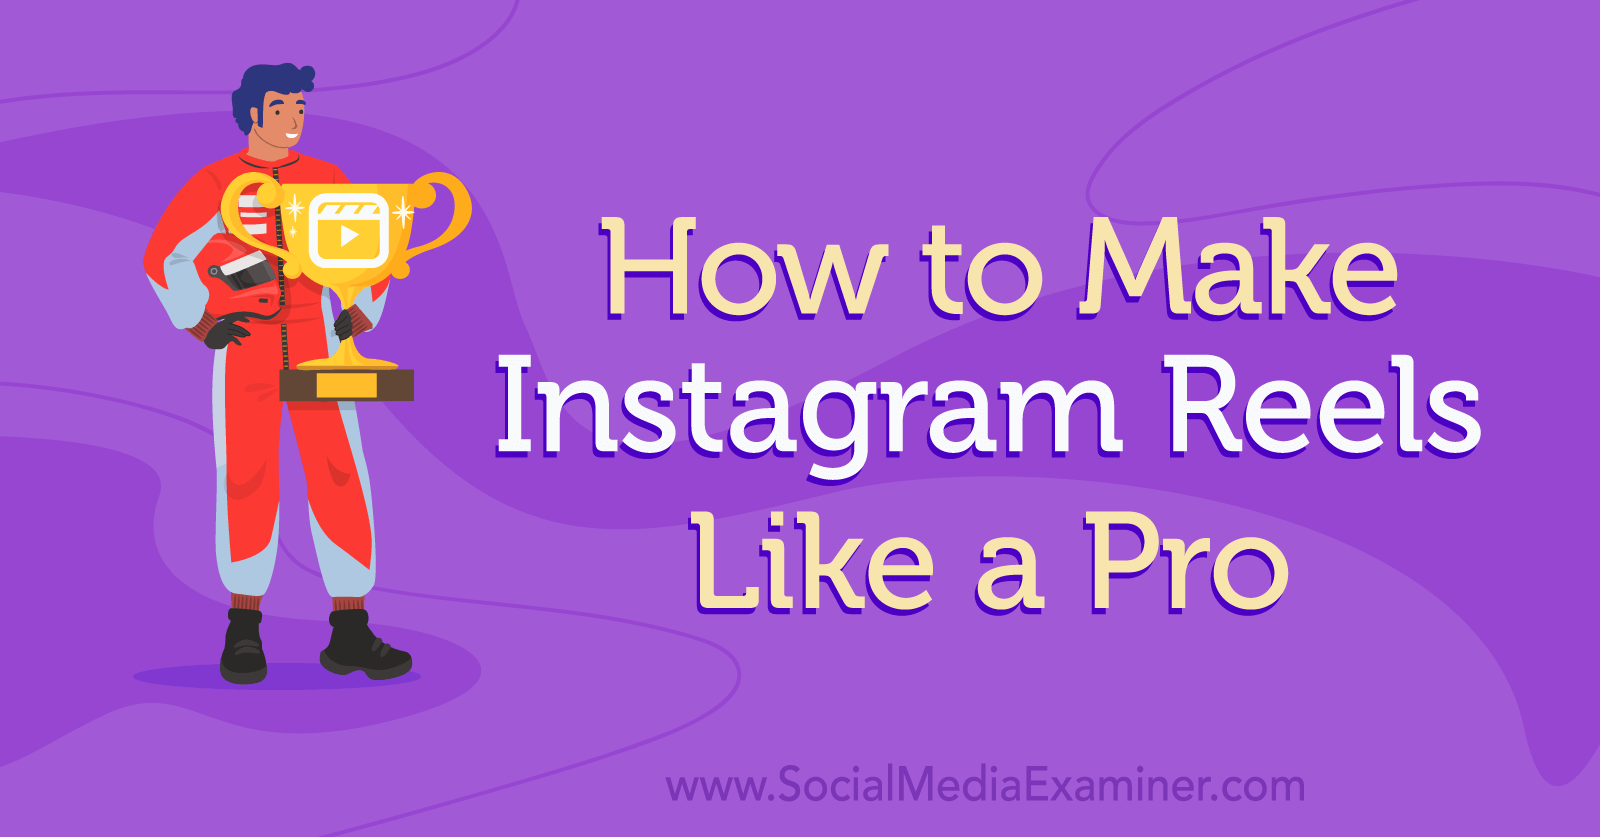 https://www.socialmediaexaminer.com/wp-content/uploads/2022/06/instagram-reels-how-to-create-1600.png